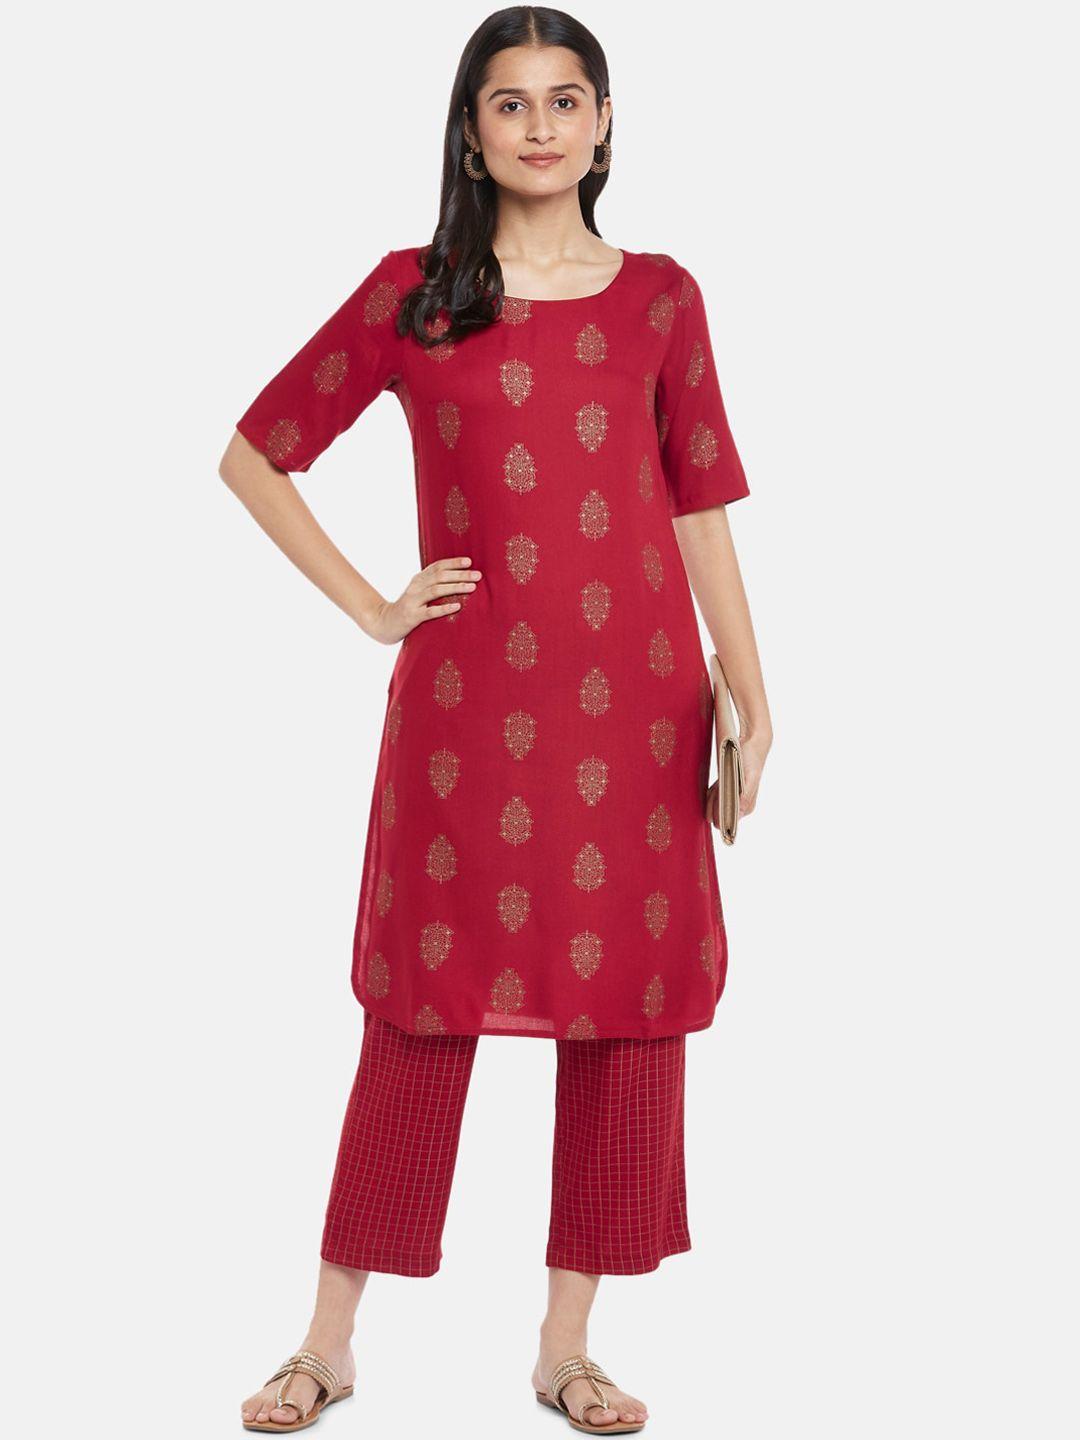 rangmanch by pantaloons women red ethnic motifs printed rayon kurta with palazzos